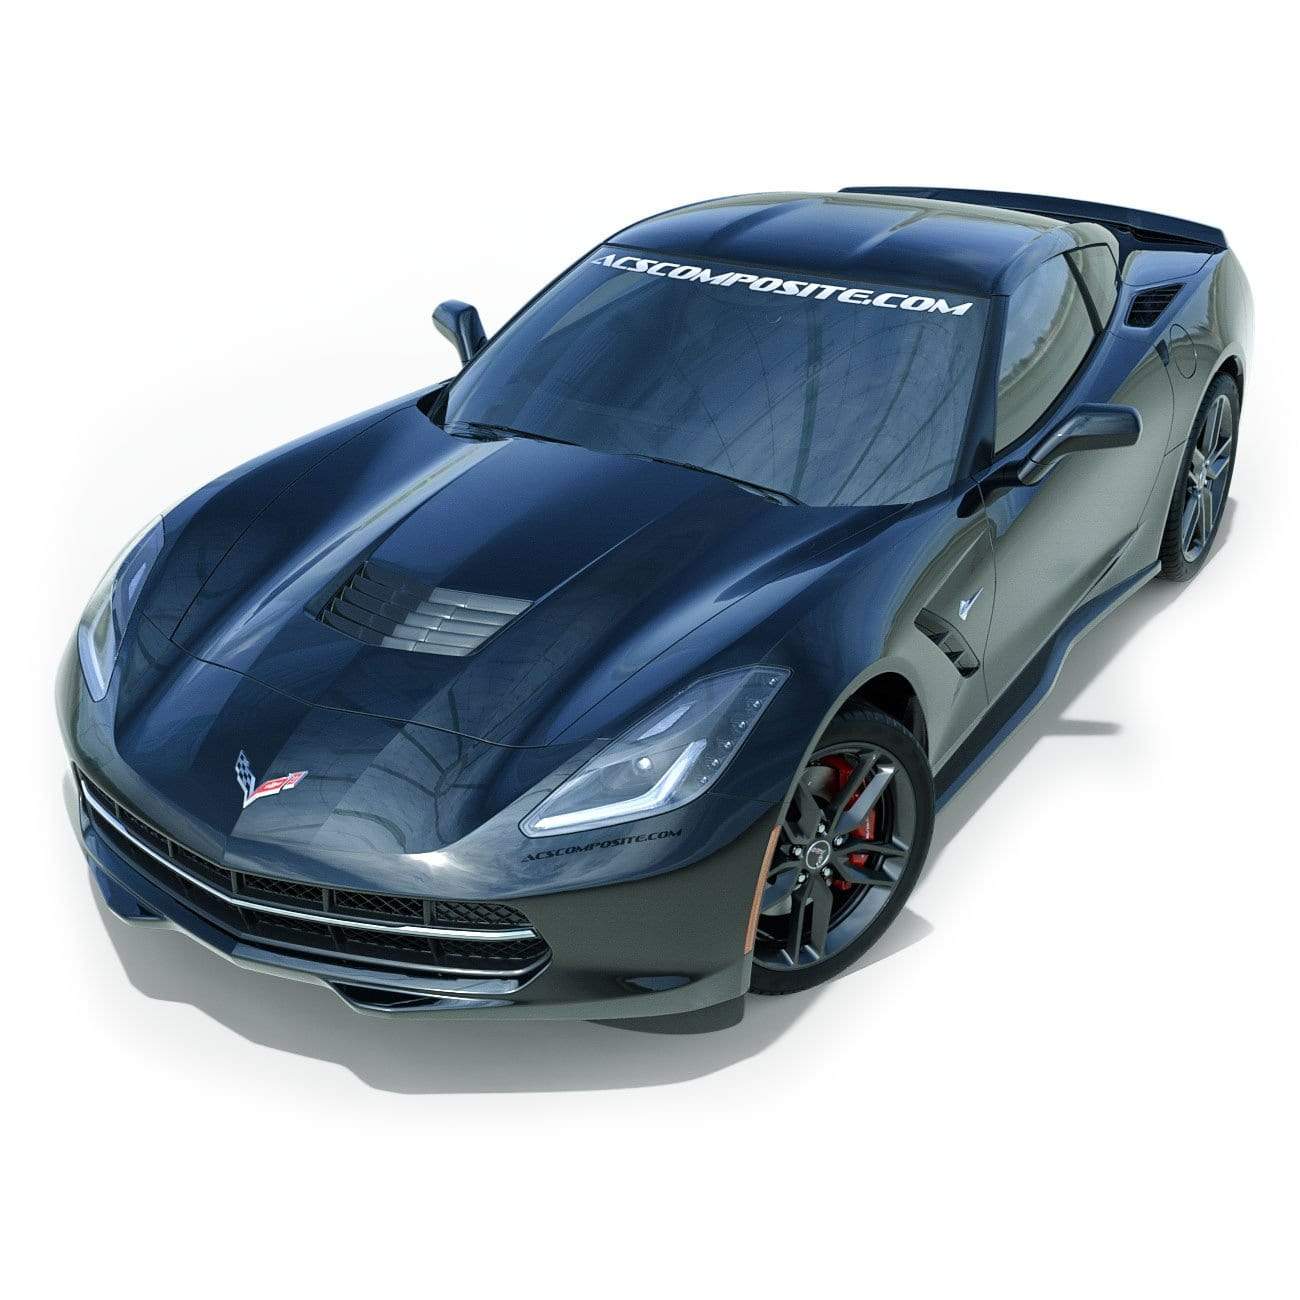 ACS Composite Zero7 Side Rockers for C7 Corvette Stingray in Carbon Flash Metallic Black [45-4-015]CFZ.